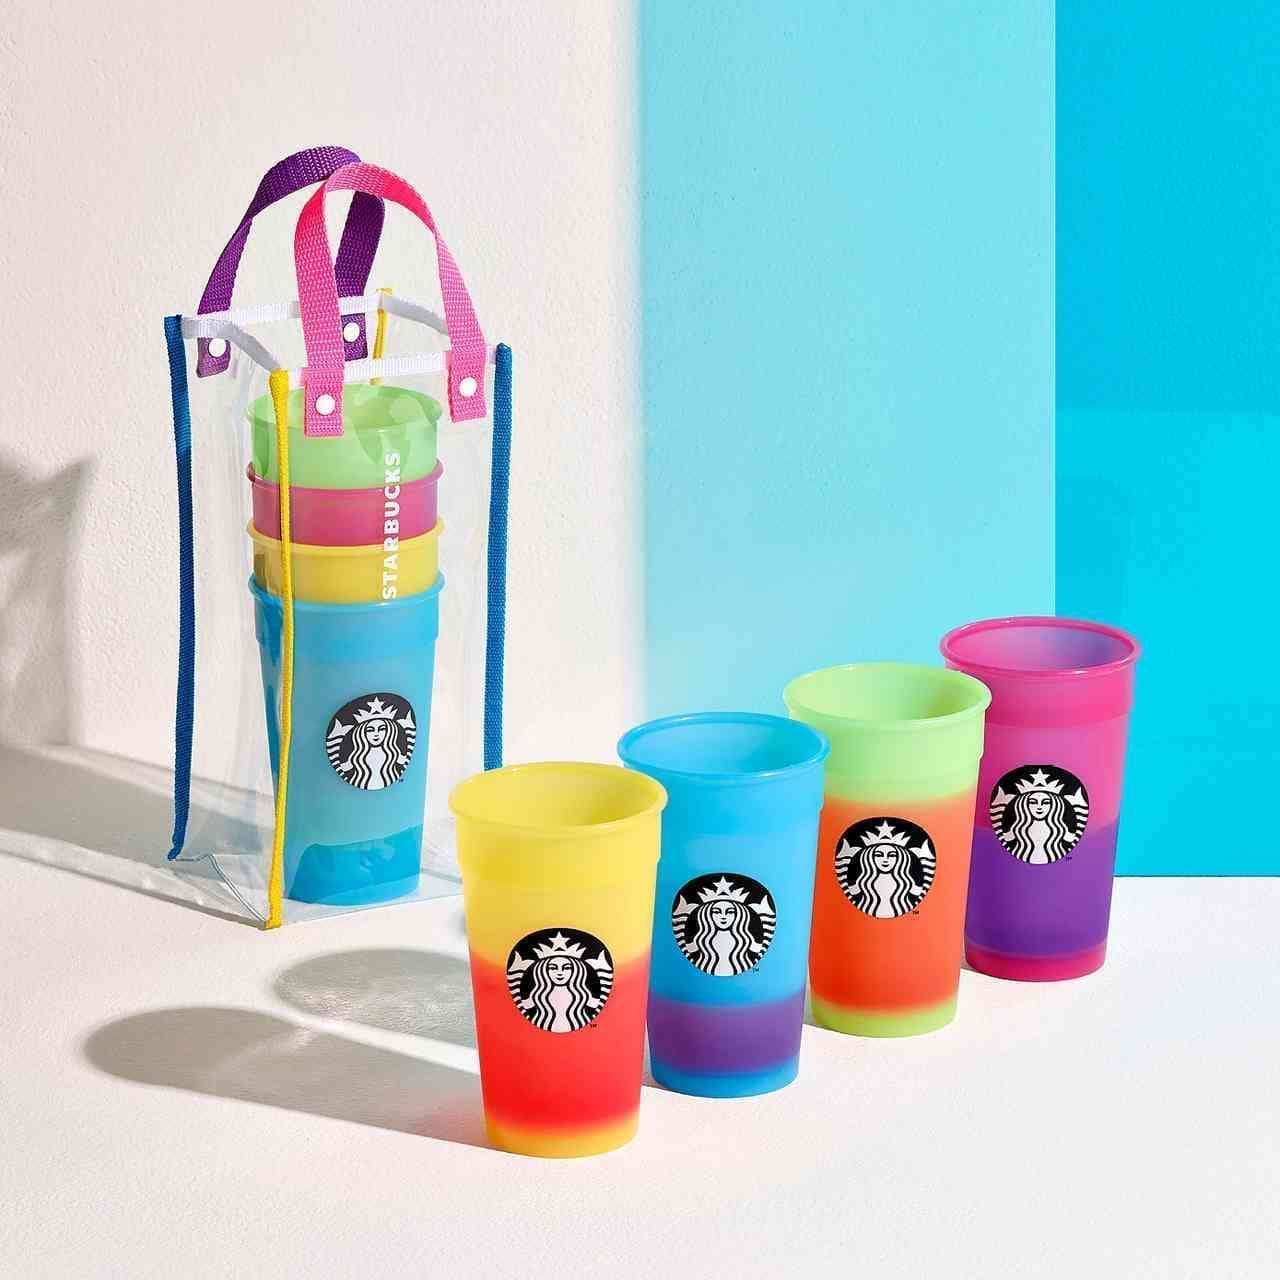 Starbucks "Asia Collection Goods"